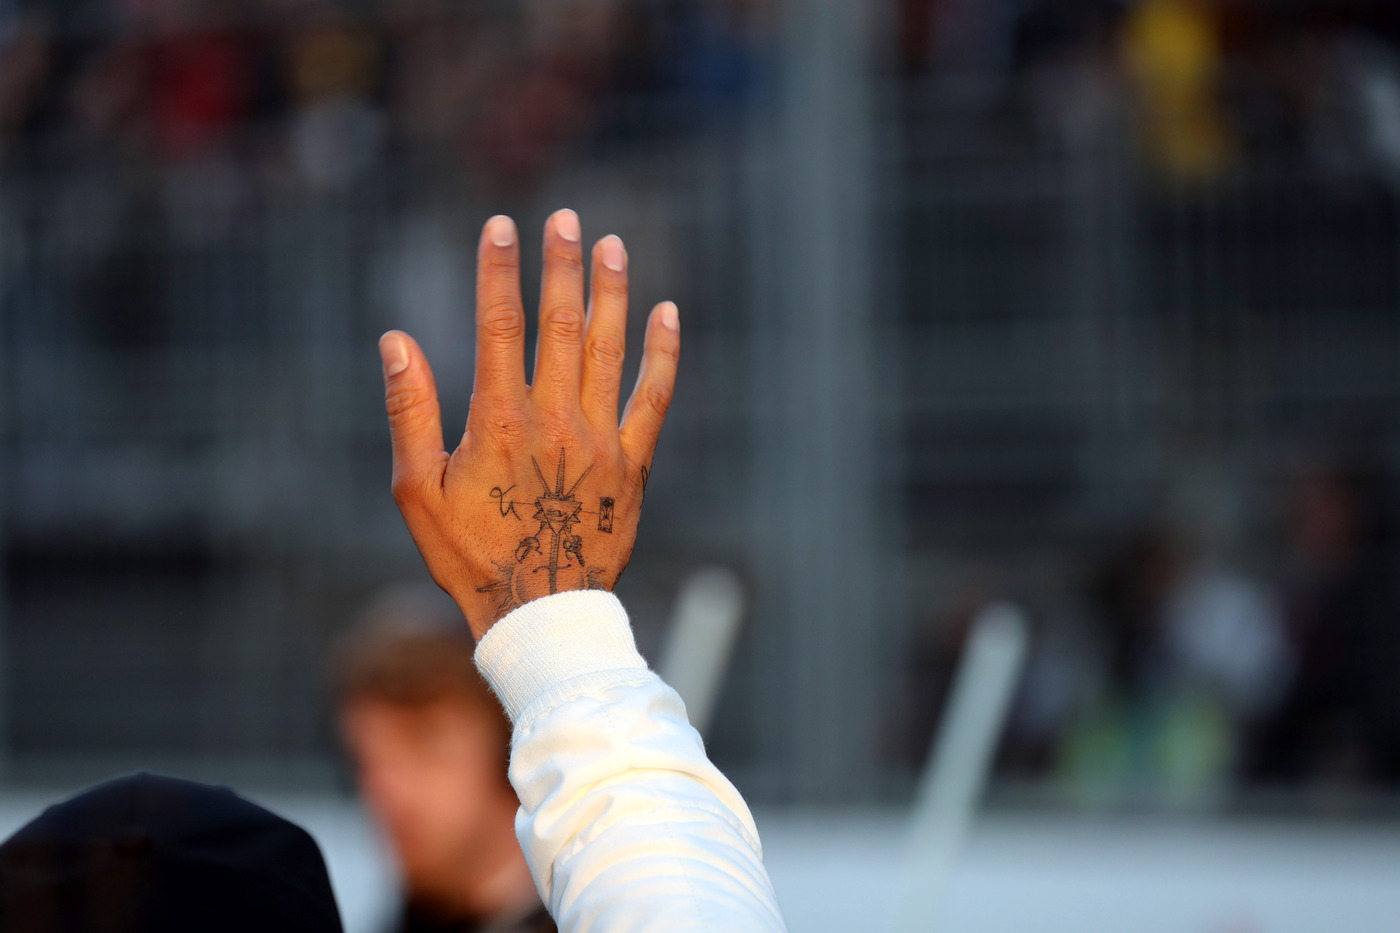 Lewis Hamilton Hand Tattoo 2019